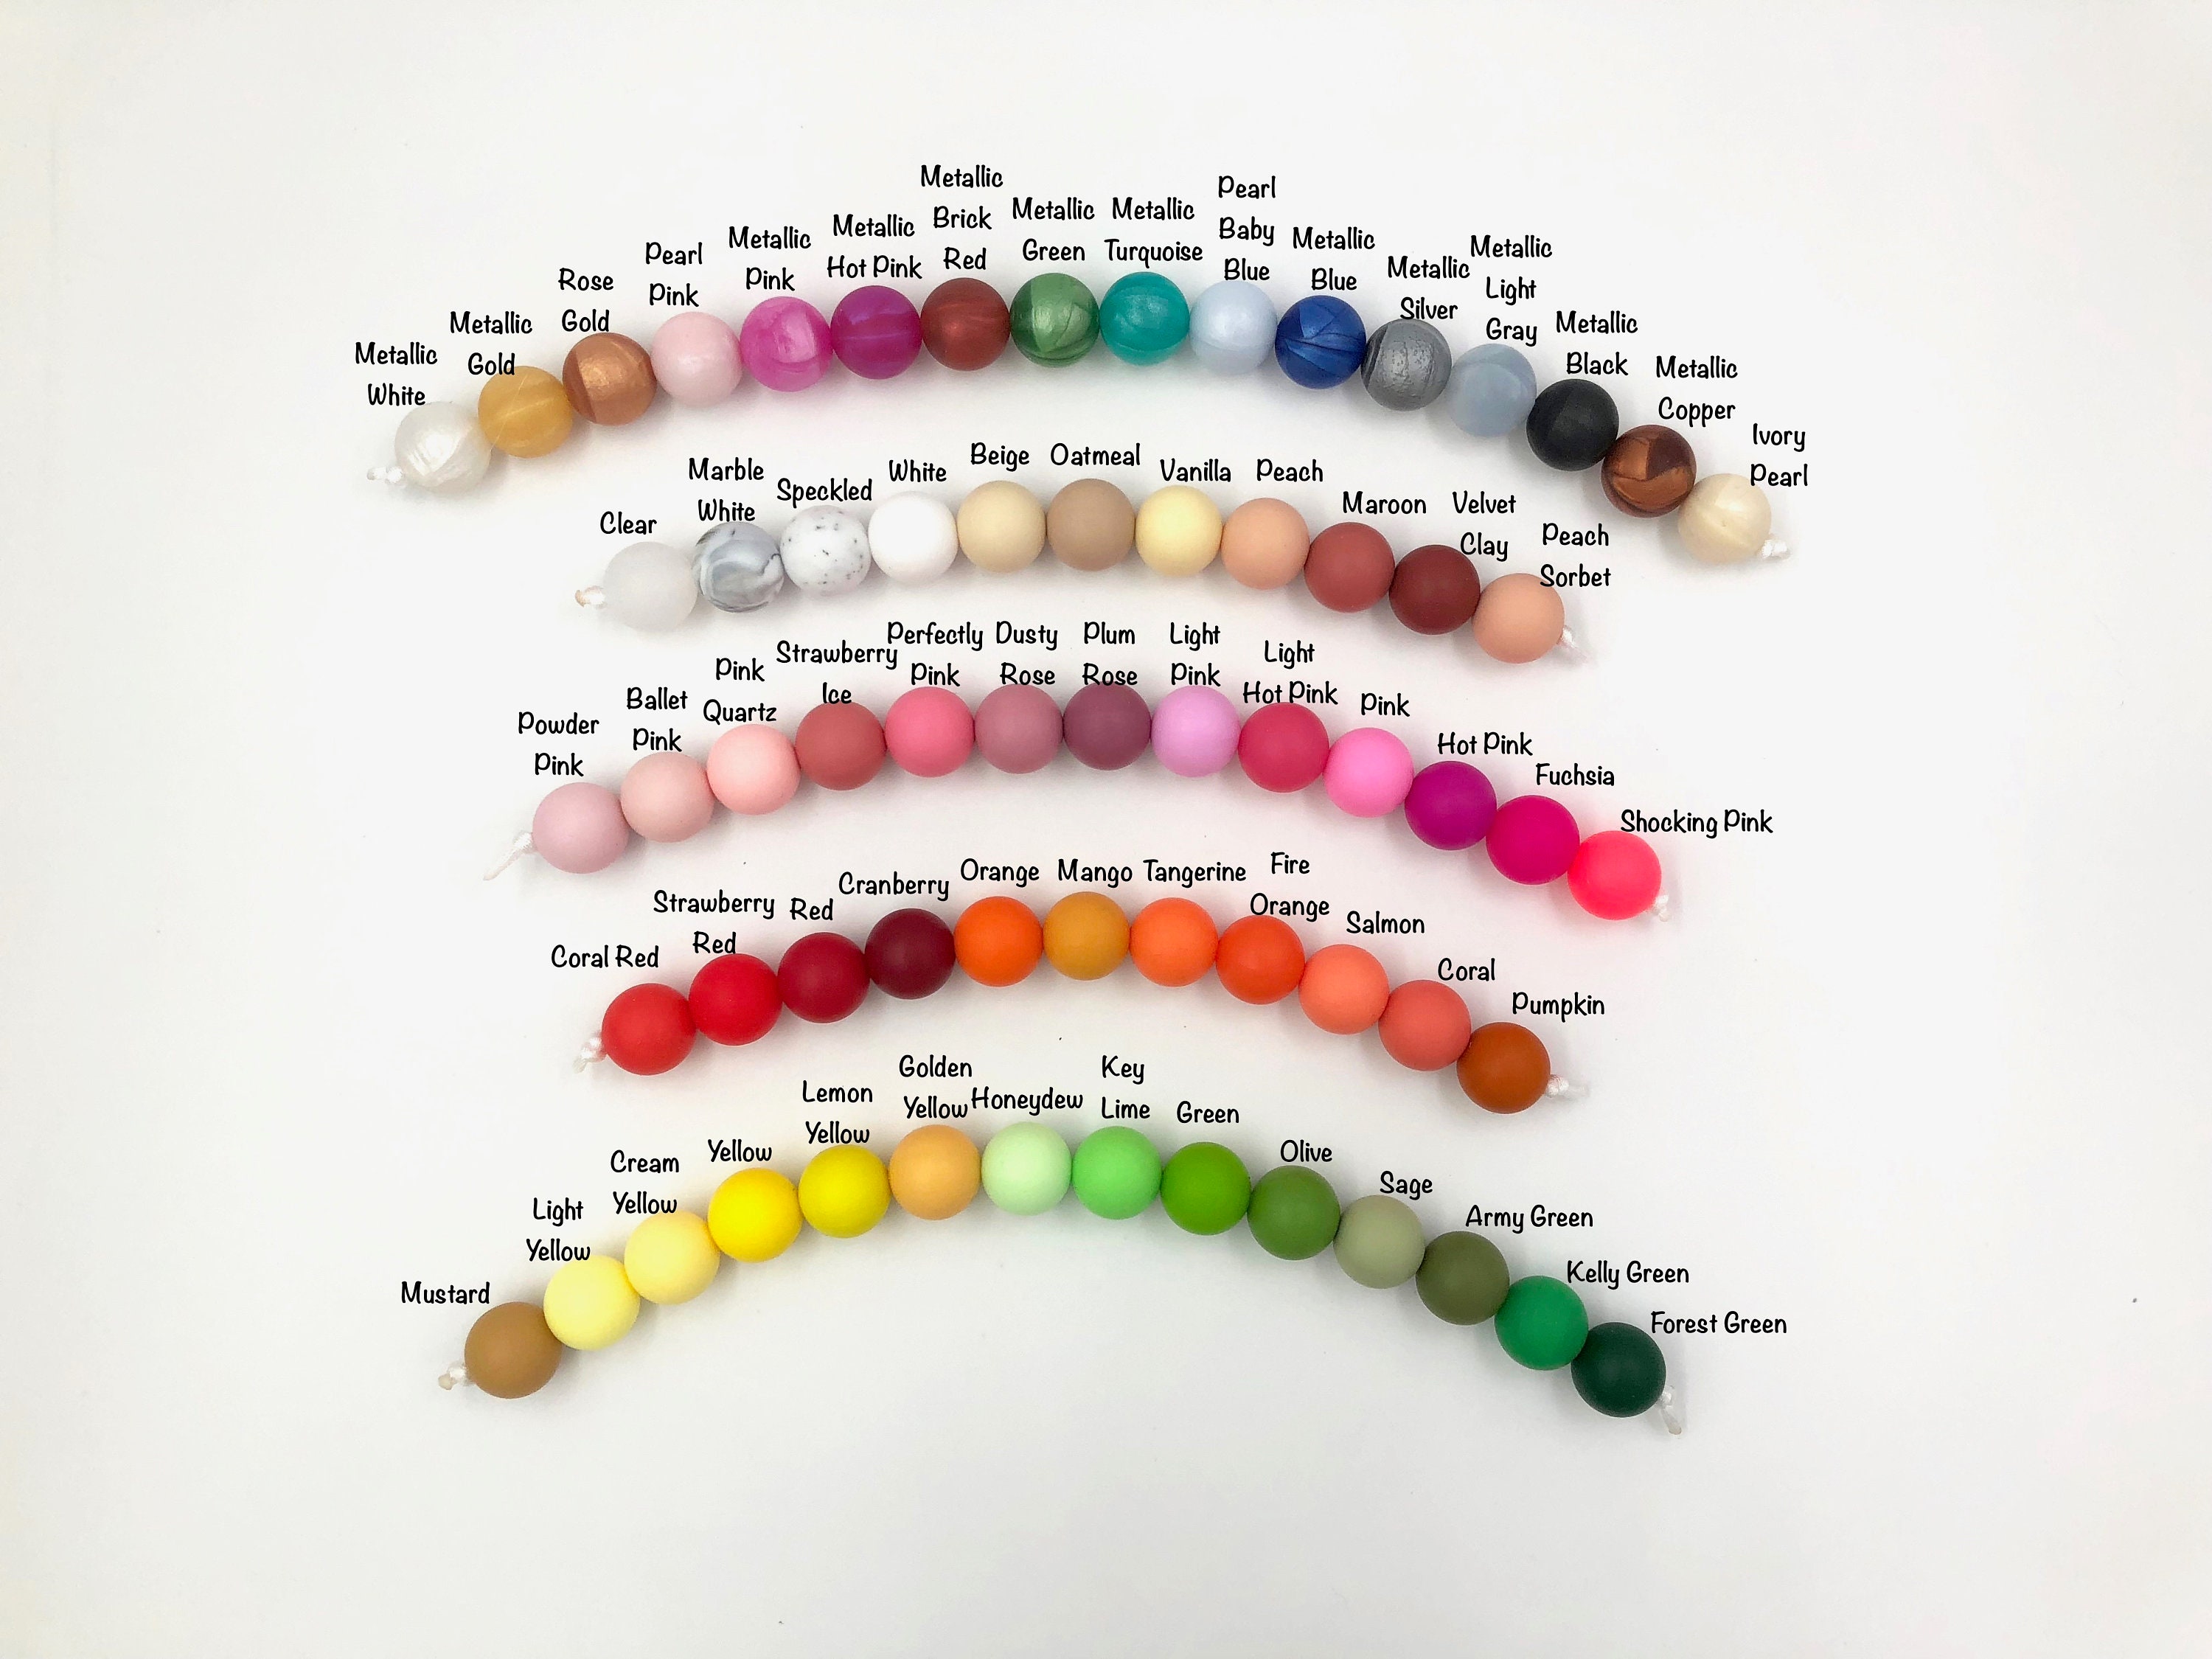 100 Mixed 15mm Round Silicone Beads – Alexa Organics LLC - Natural